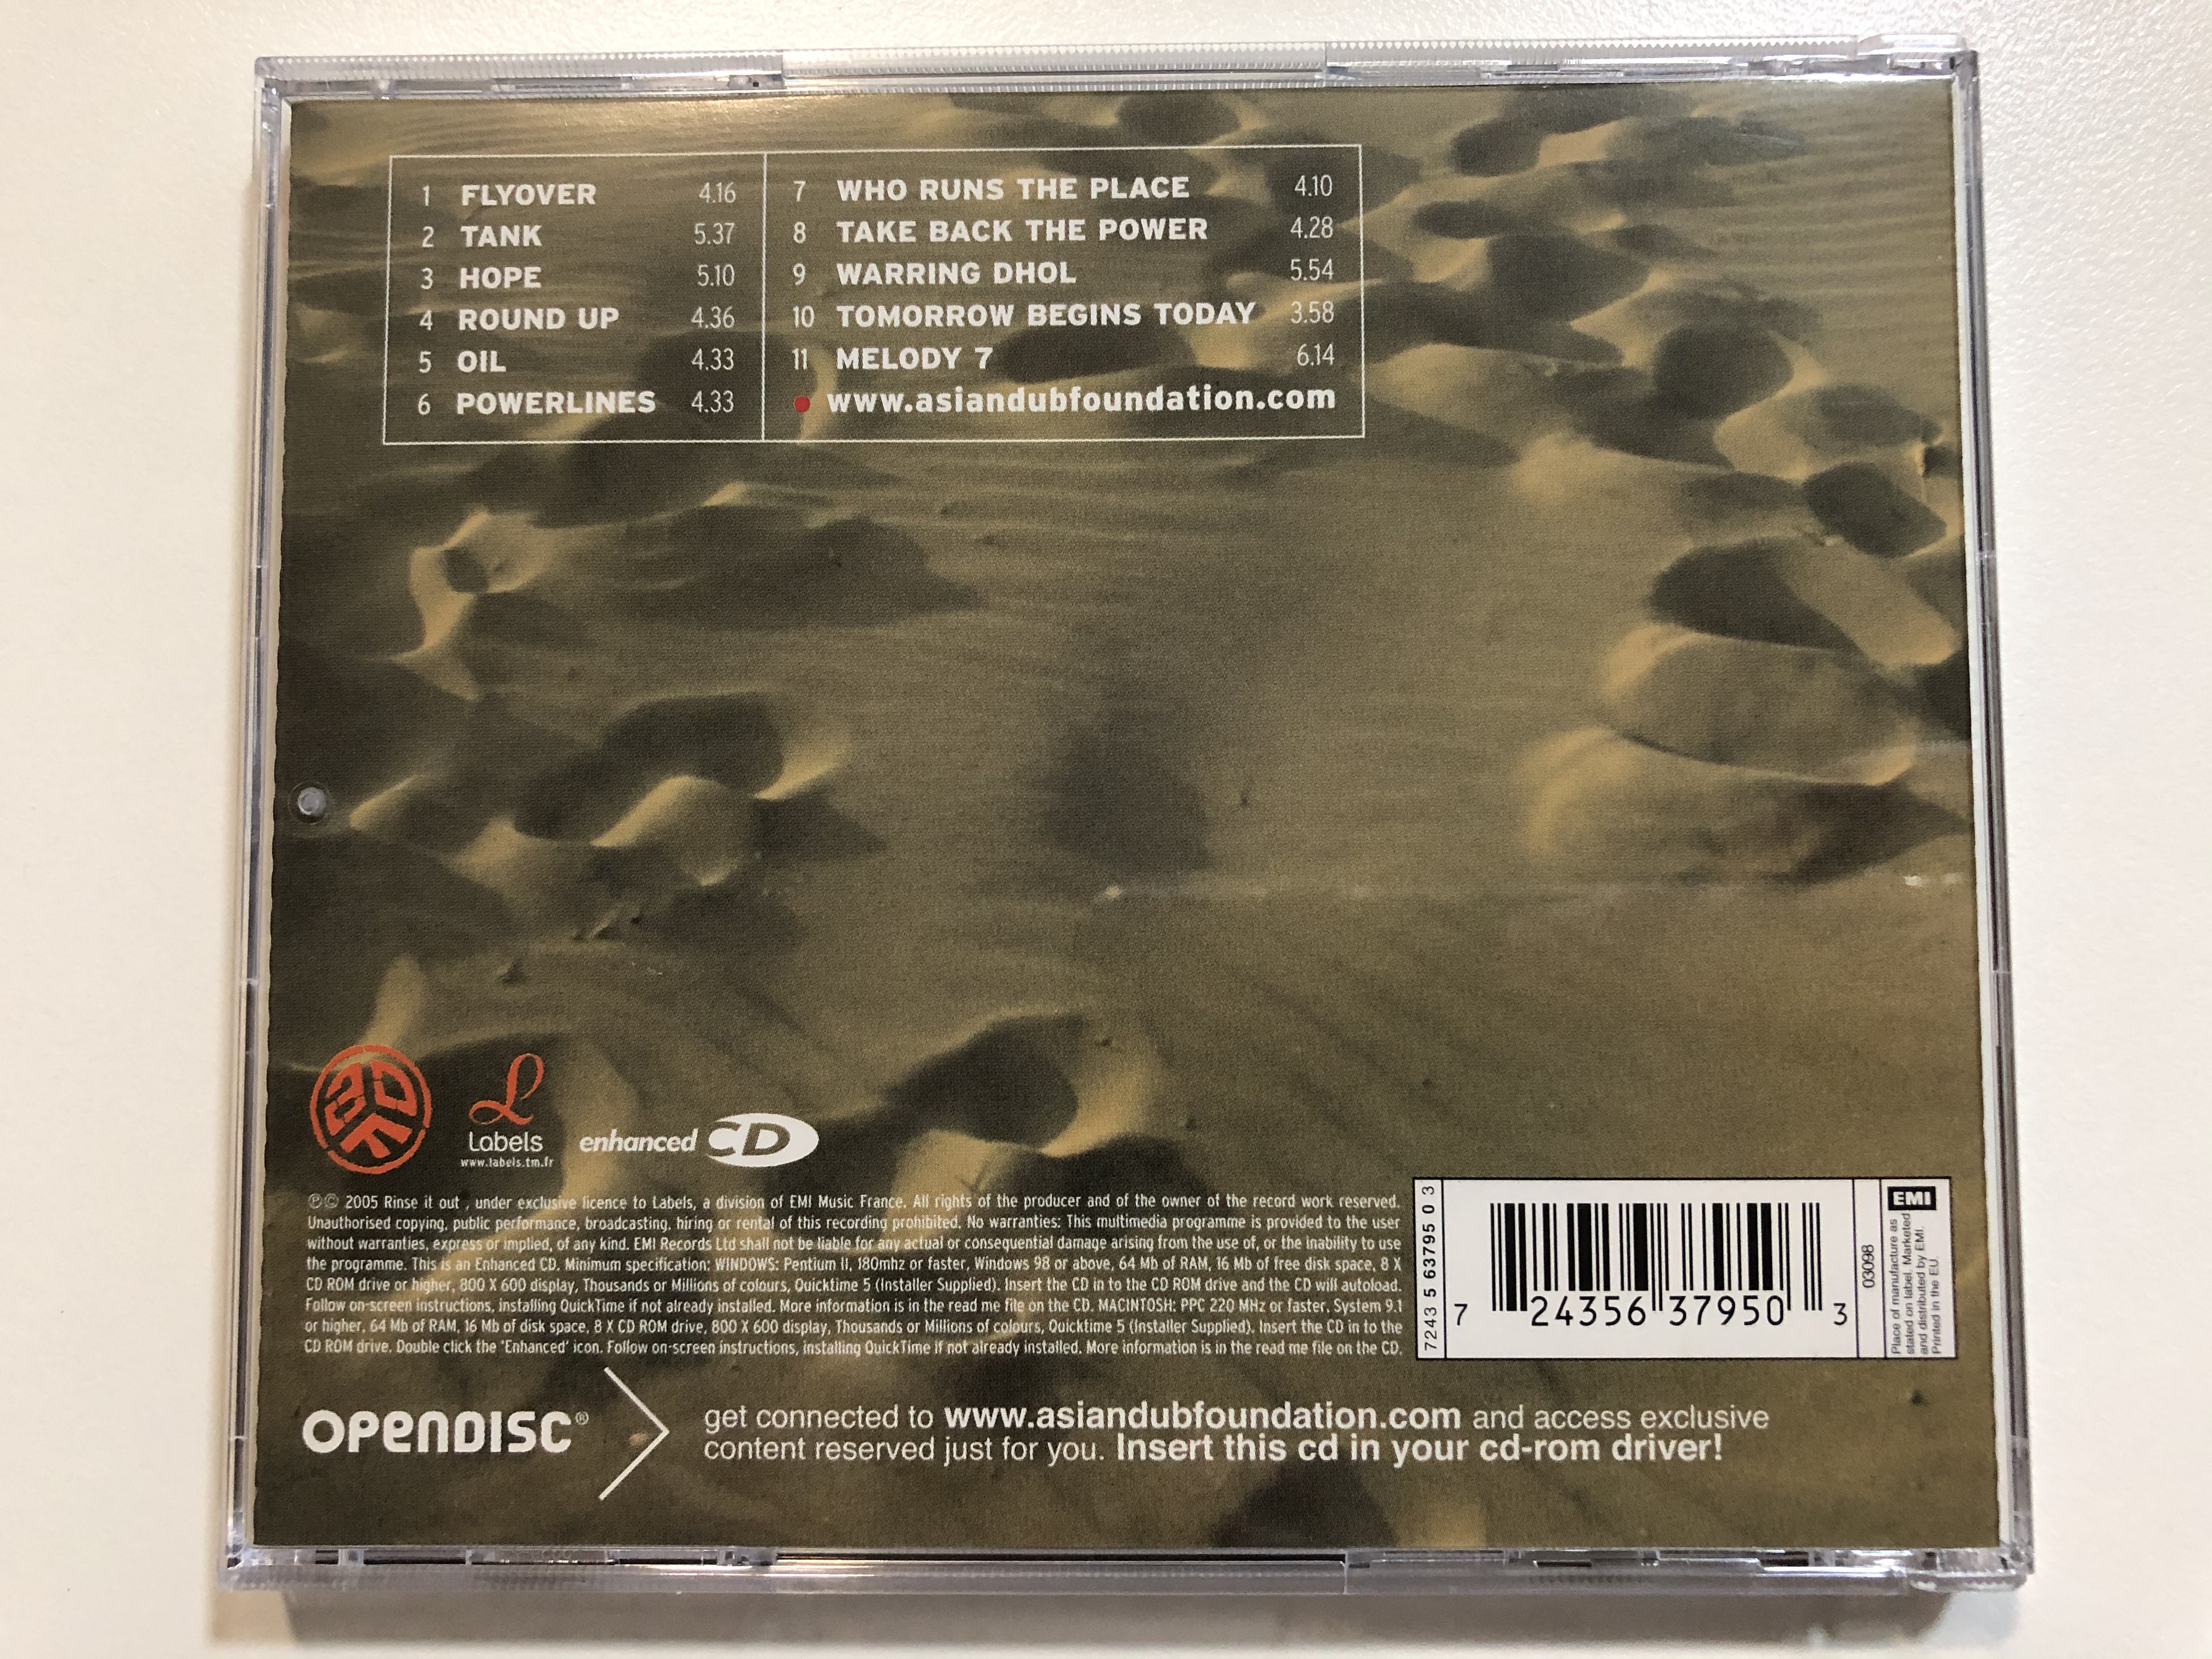 asian-dub-foundation-tank-labels-audio-cd-2005-724356379503-4-.jpg